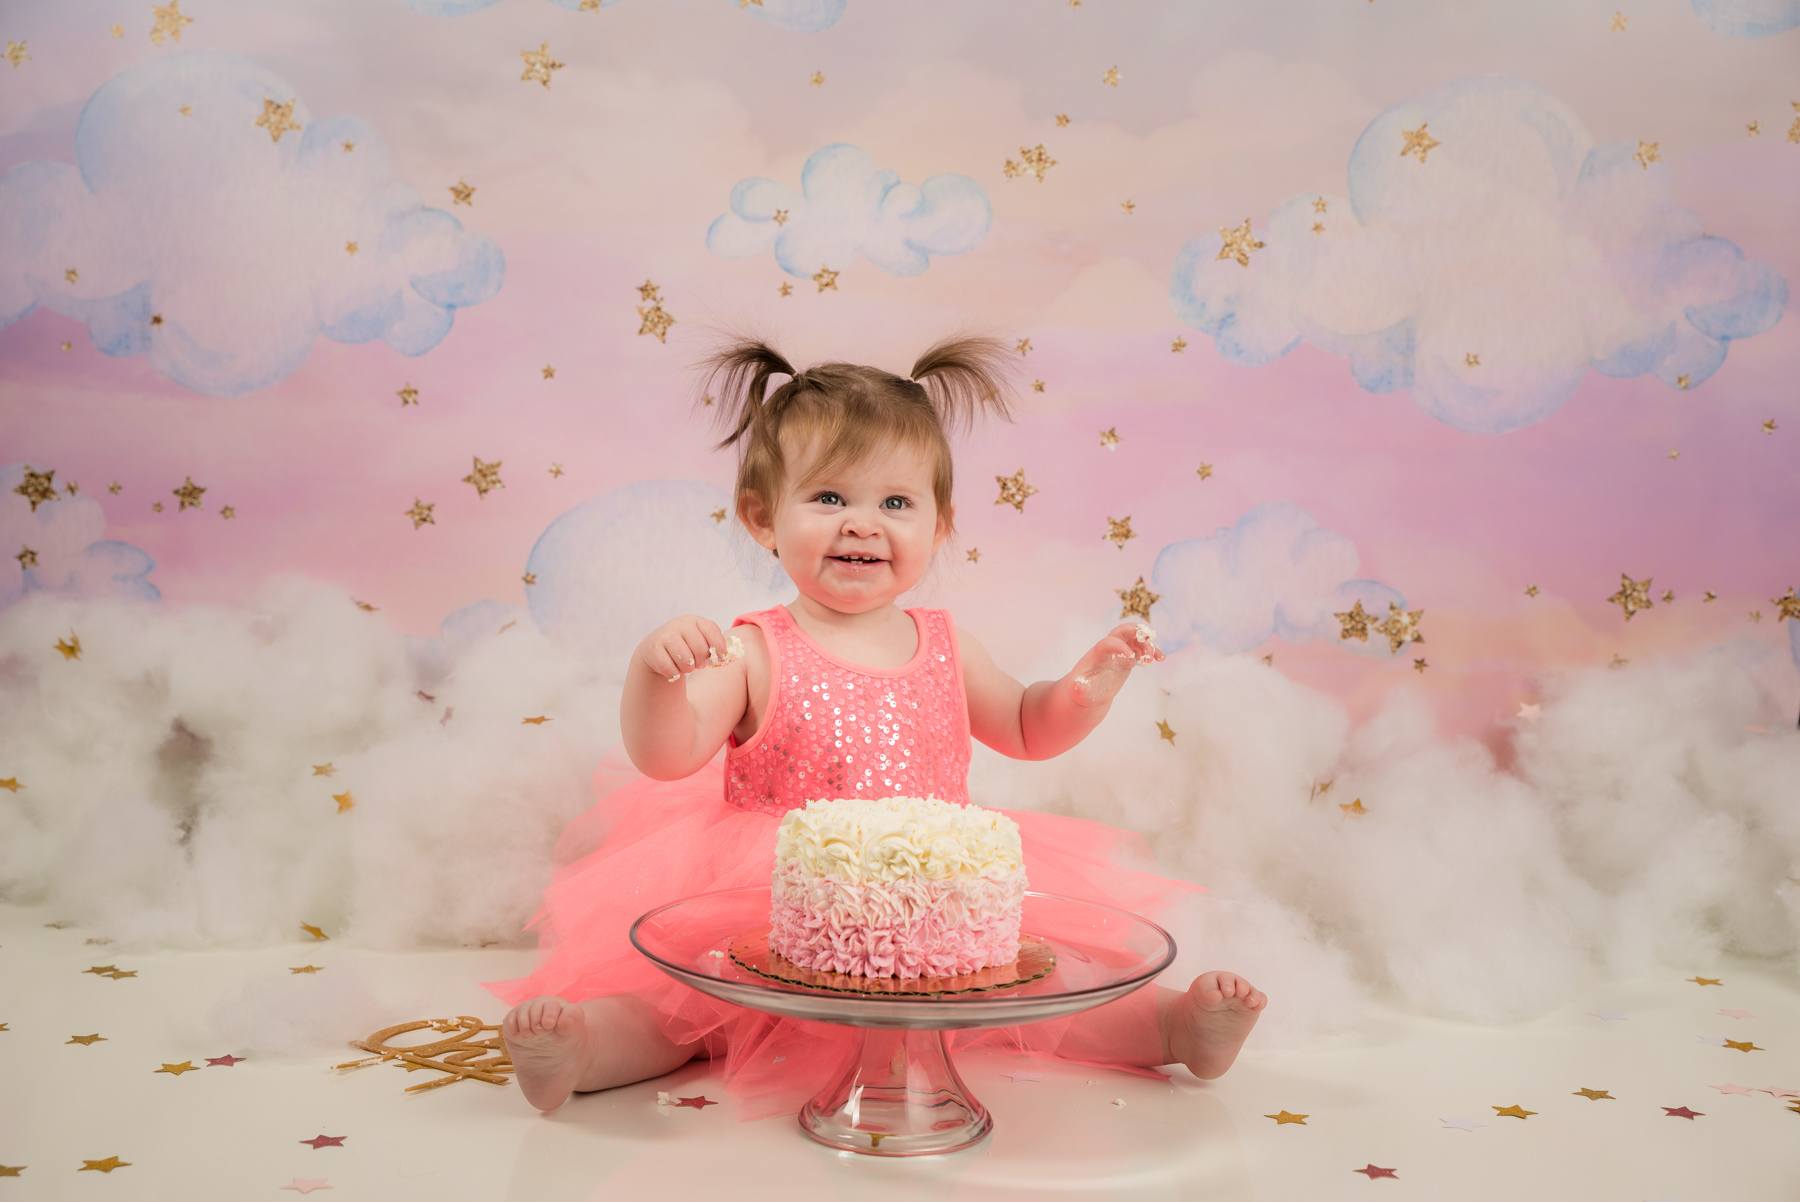 Baby Cake Smash 4 - Cake Smash - 1st Birthday